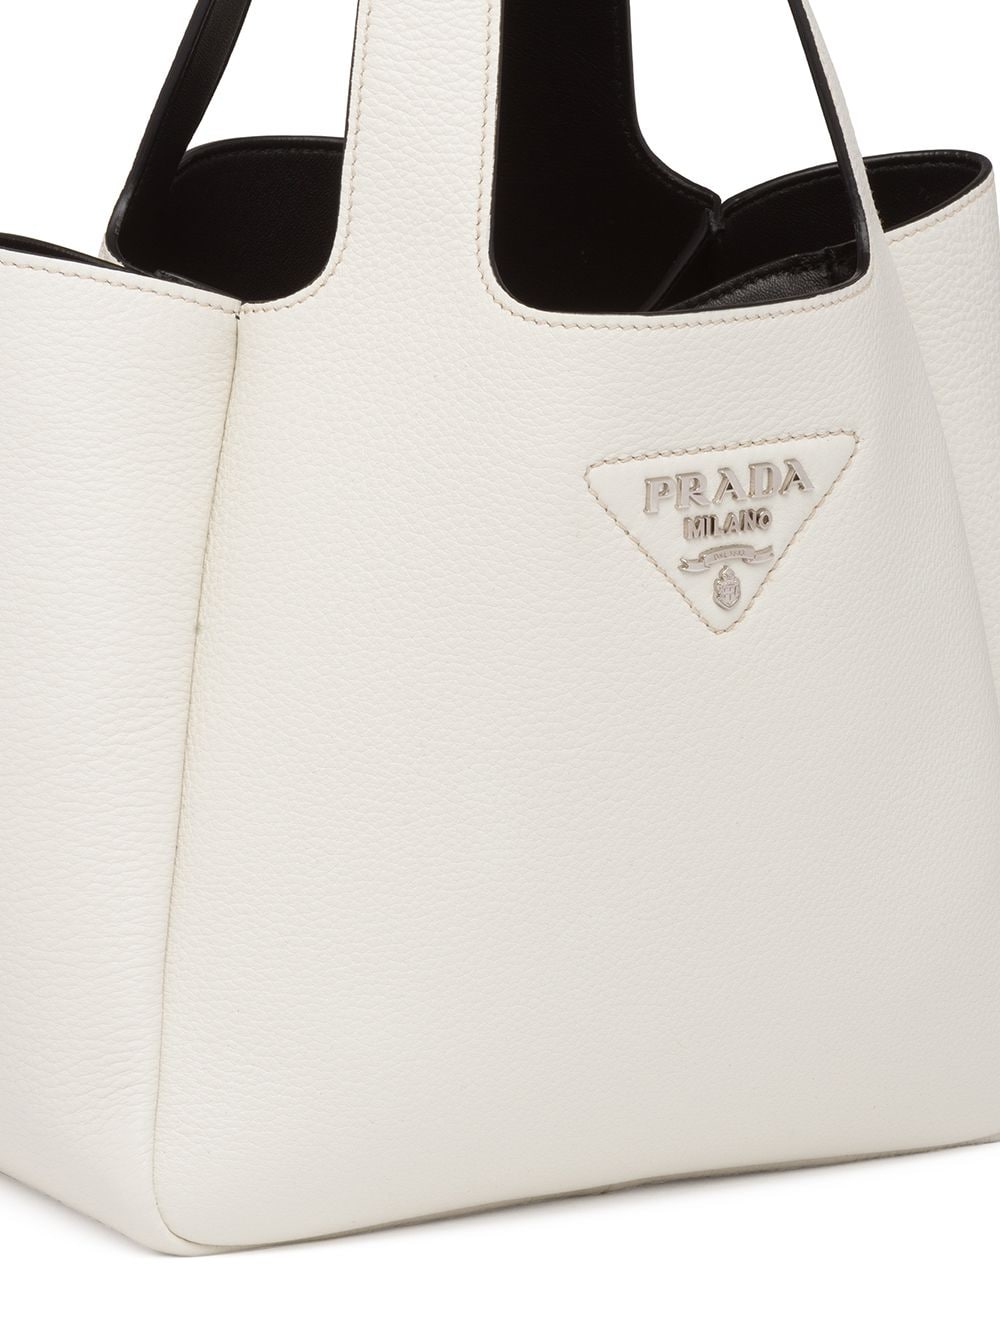 Shop Prada logo-plaque tote bag with Express Delivery - FARFETCH